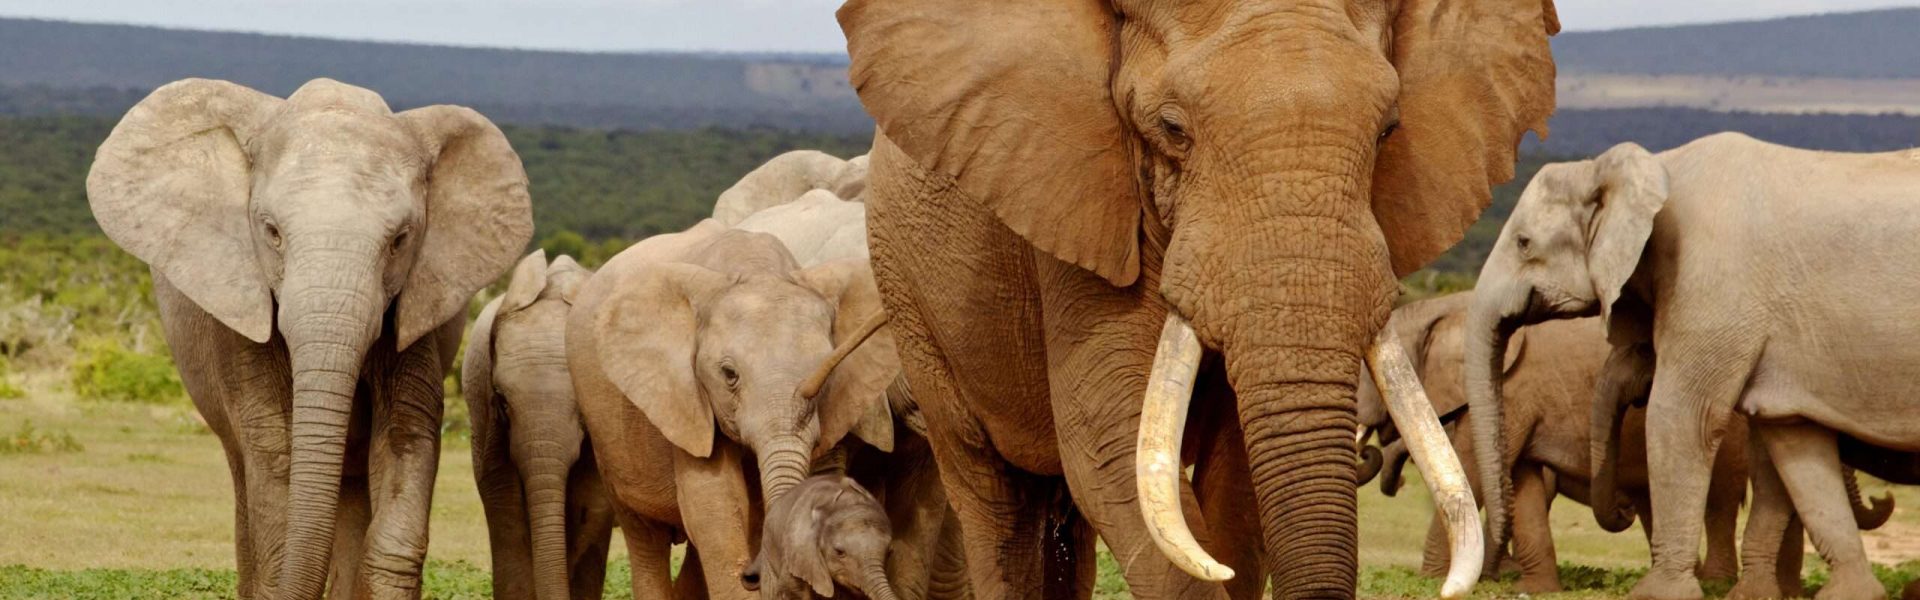 Südafrika-Reisebüro-Elefantenherde-Savanne